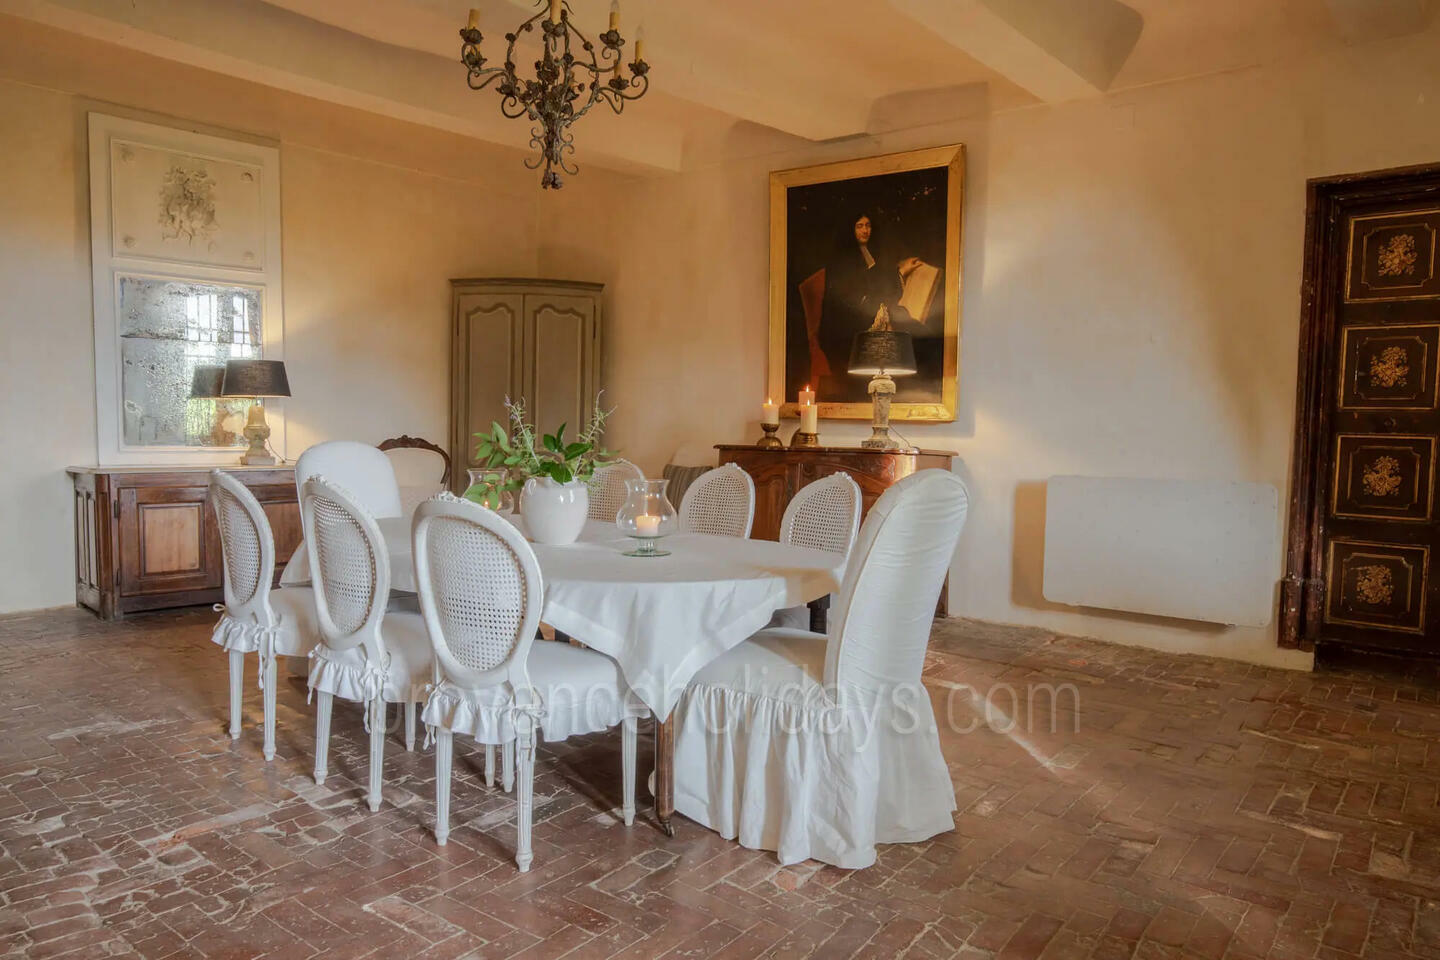 43 - Château de Gignac: Villa: Interior